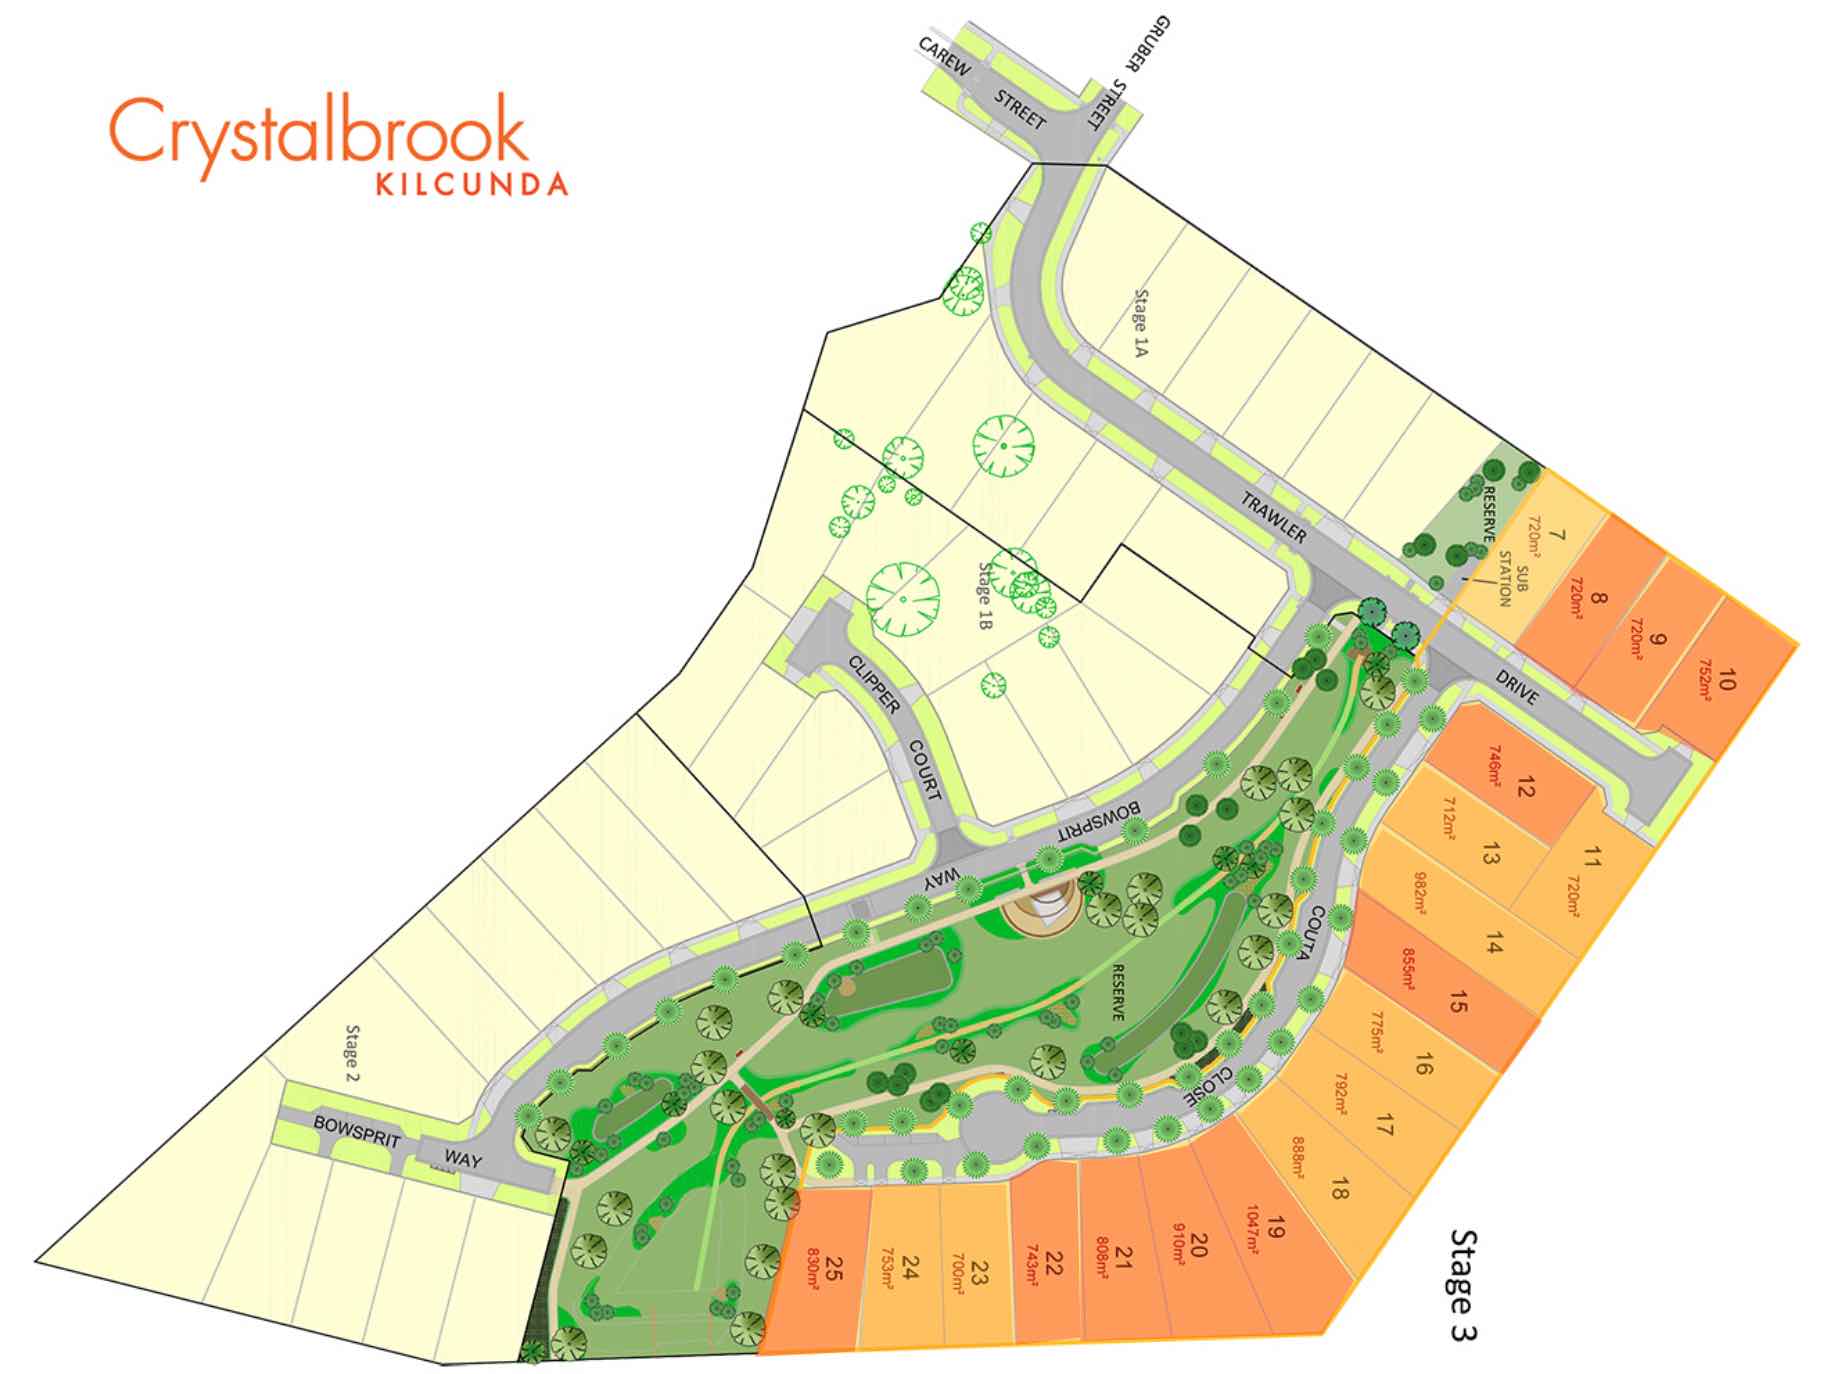 Crystalbrook Estate - Kilcunda Masterplan